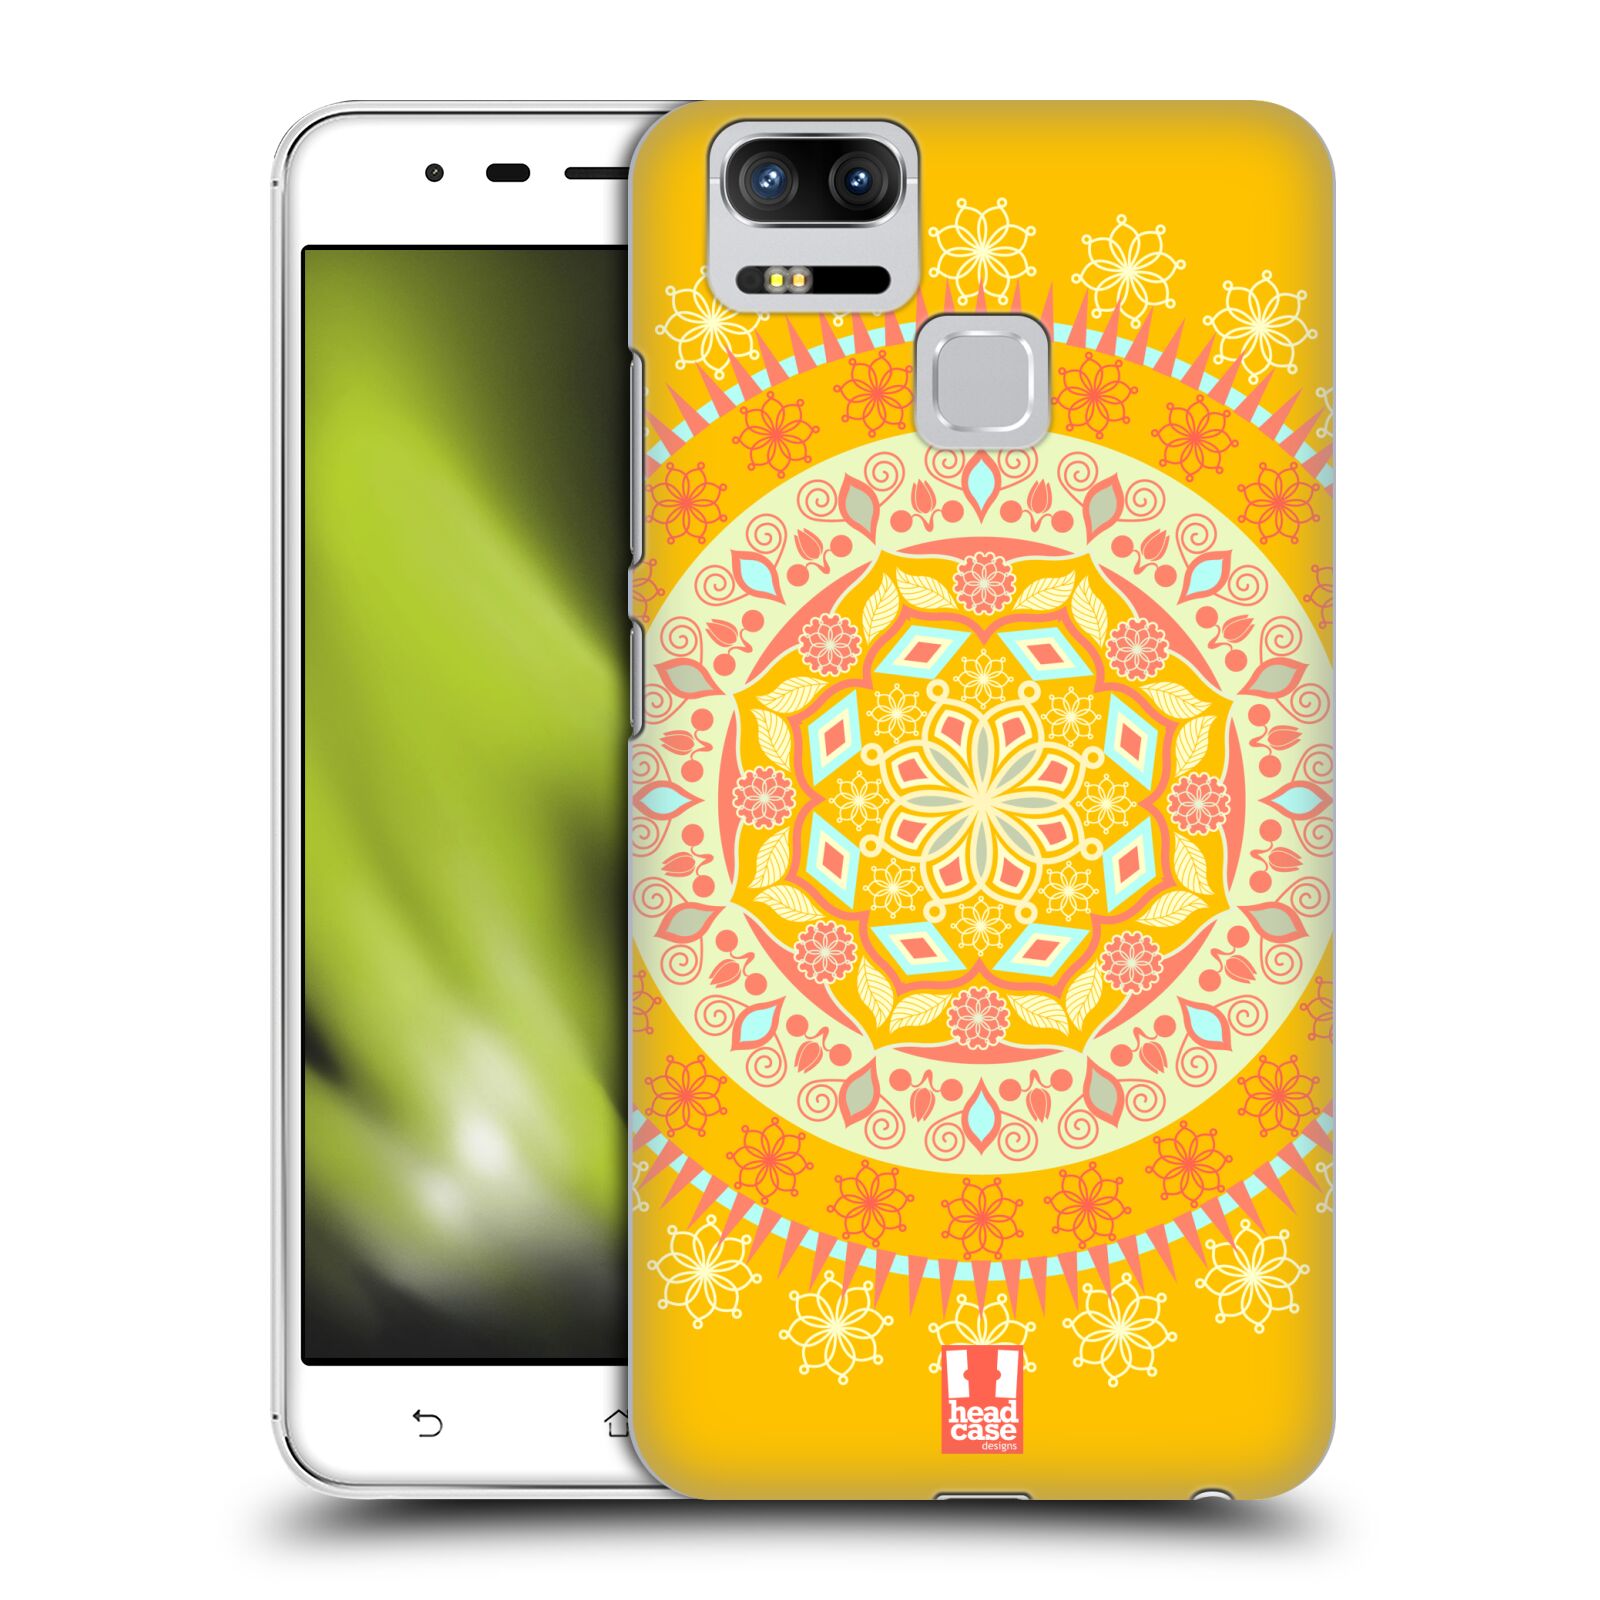 HEAD CASE plastový obal na mobil Asus Zenfone 3 Zoom ZE553KL vzor Indie Mandala slunce barevný motiv ŽLUTÁ